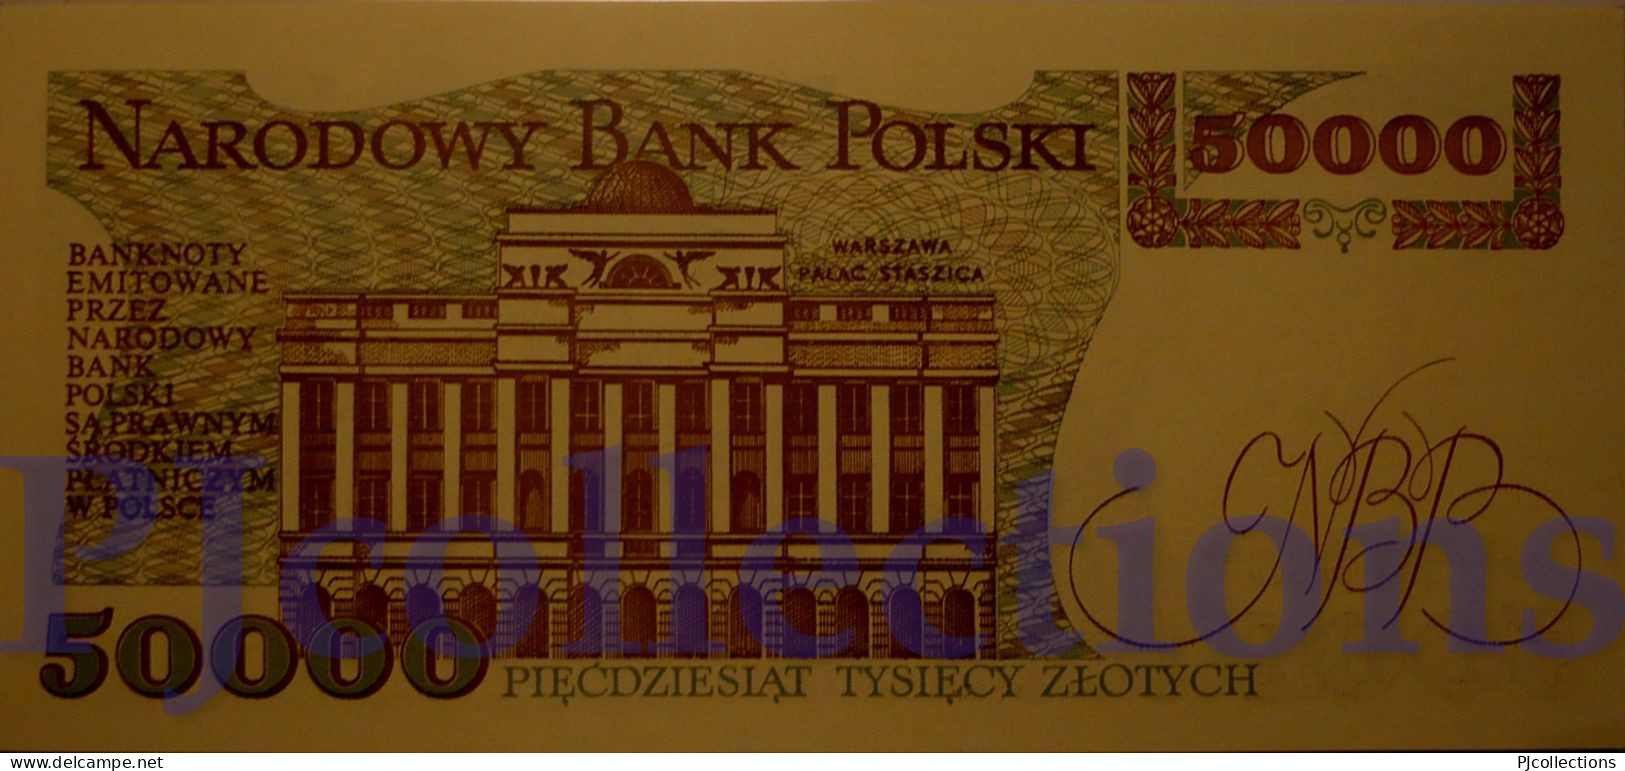 POLONIA - POLAND 50000 ZLOTYCH 1989 PICK 153a UNC PREFIX "A" RARE - Polen